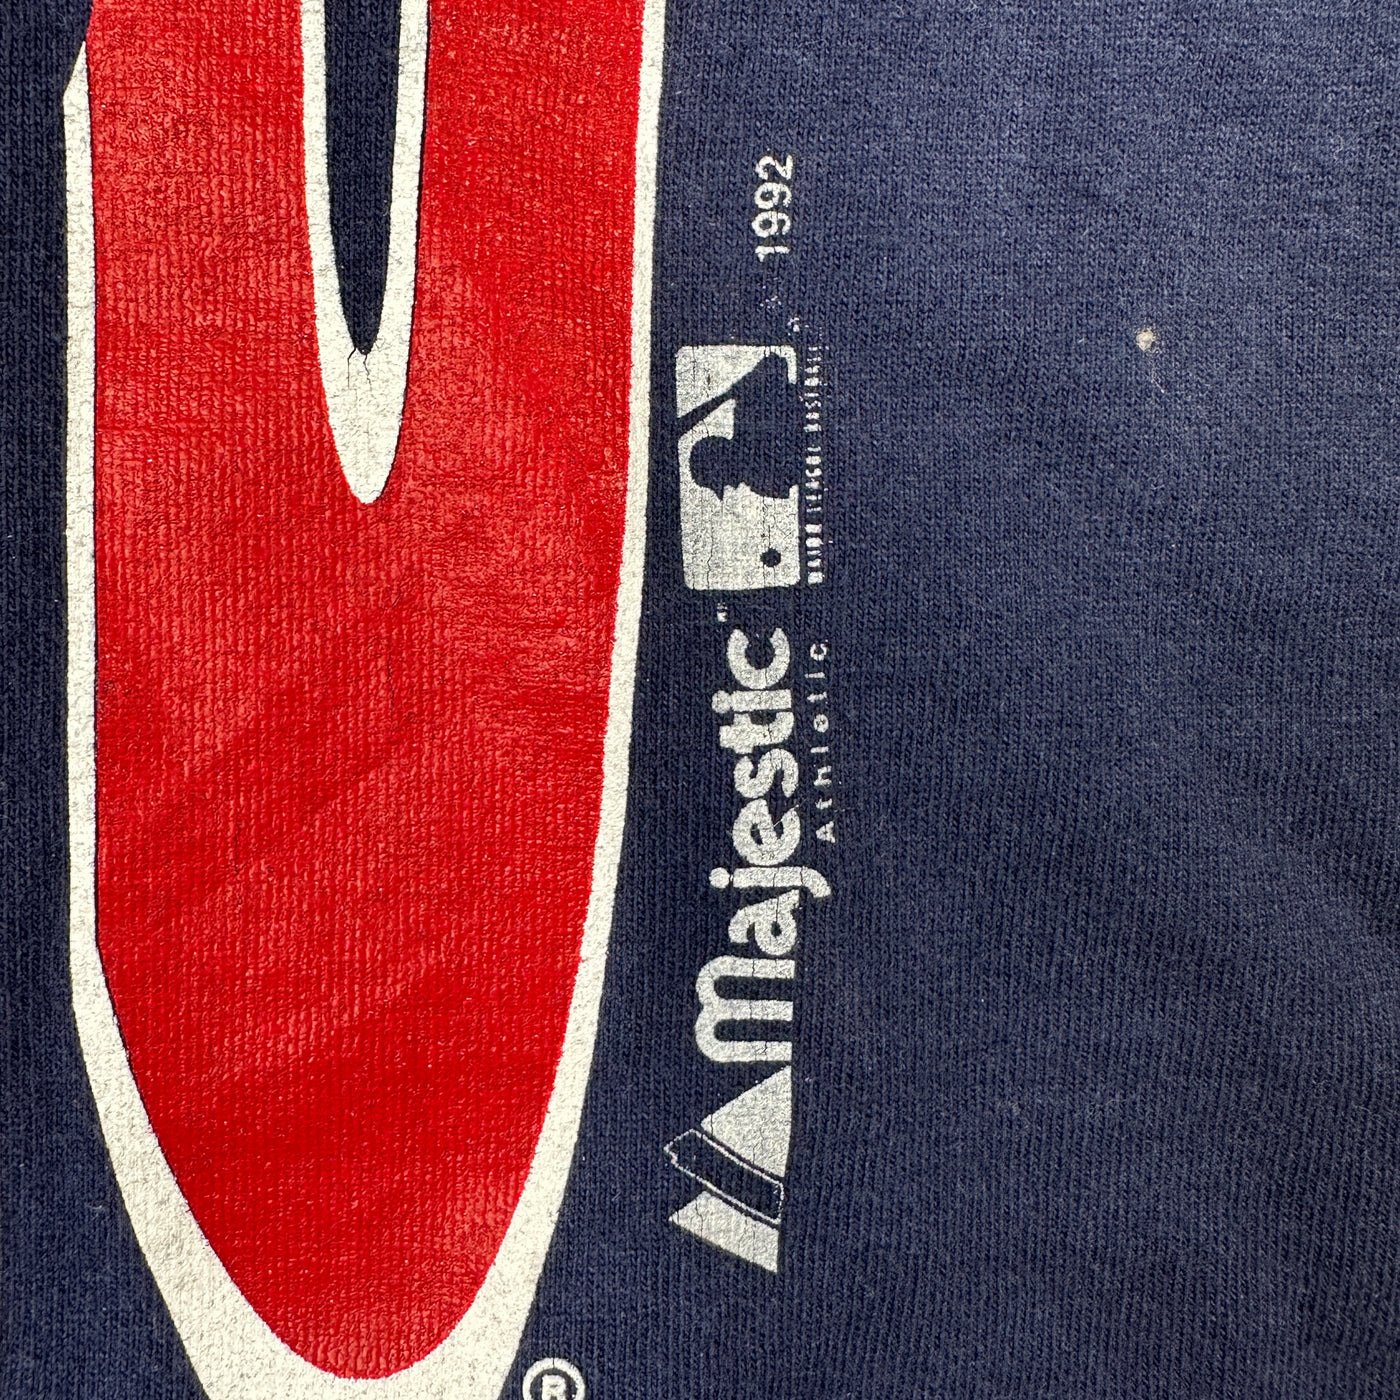 1992 Indians Logo MLB Navy Blue Sports T-shirt sz L